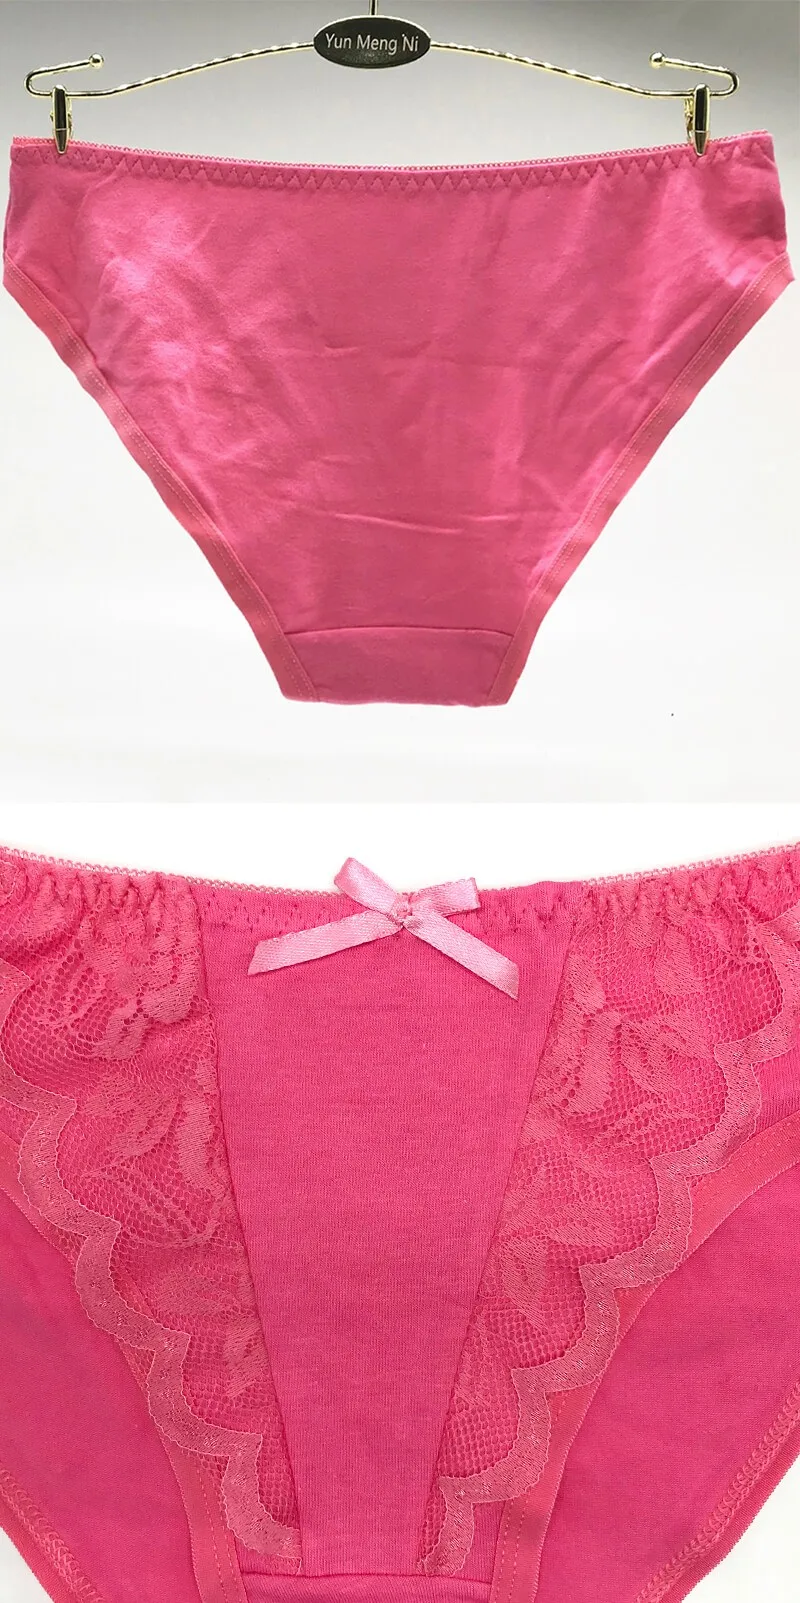 Yun Meng Ni Underwear New Design Young Girls Panties Girls Underwear